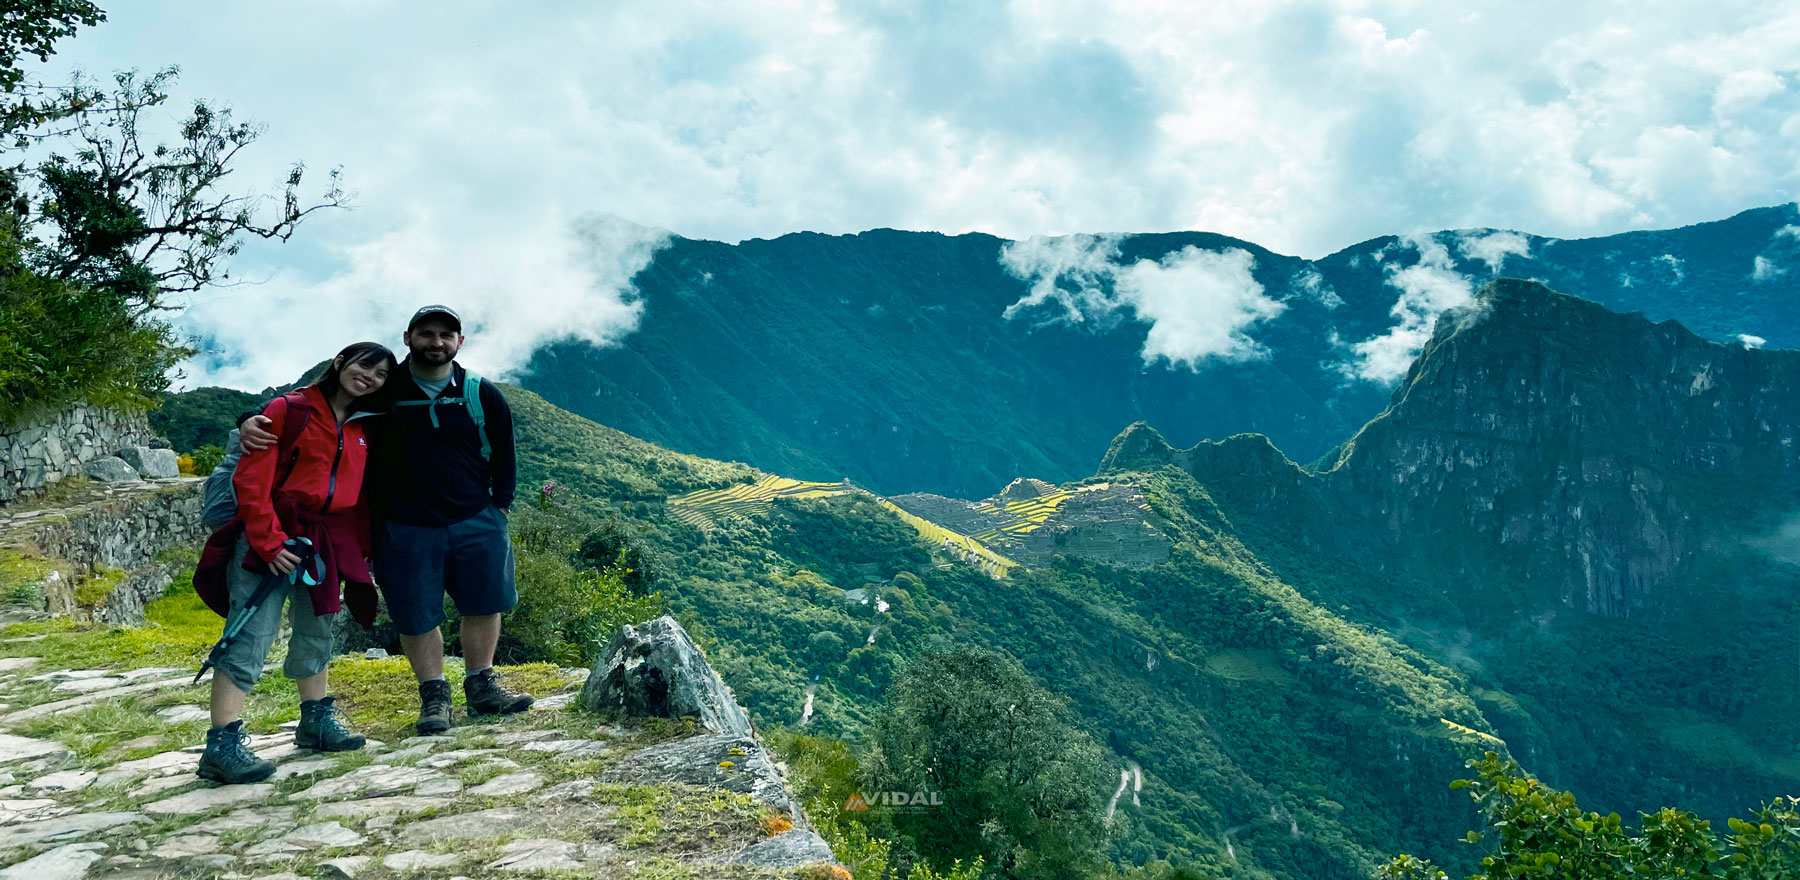 View in the short Inca Trail to Machu Picchu